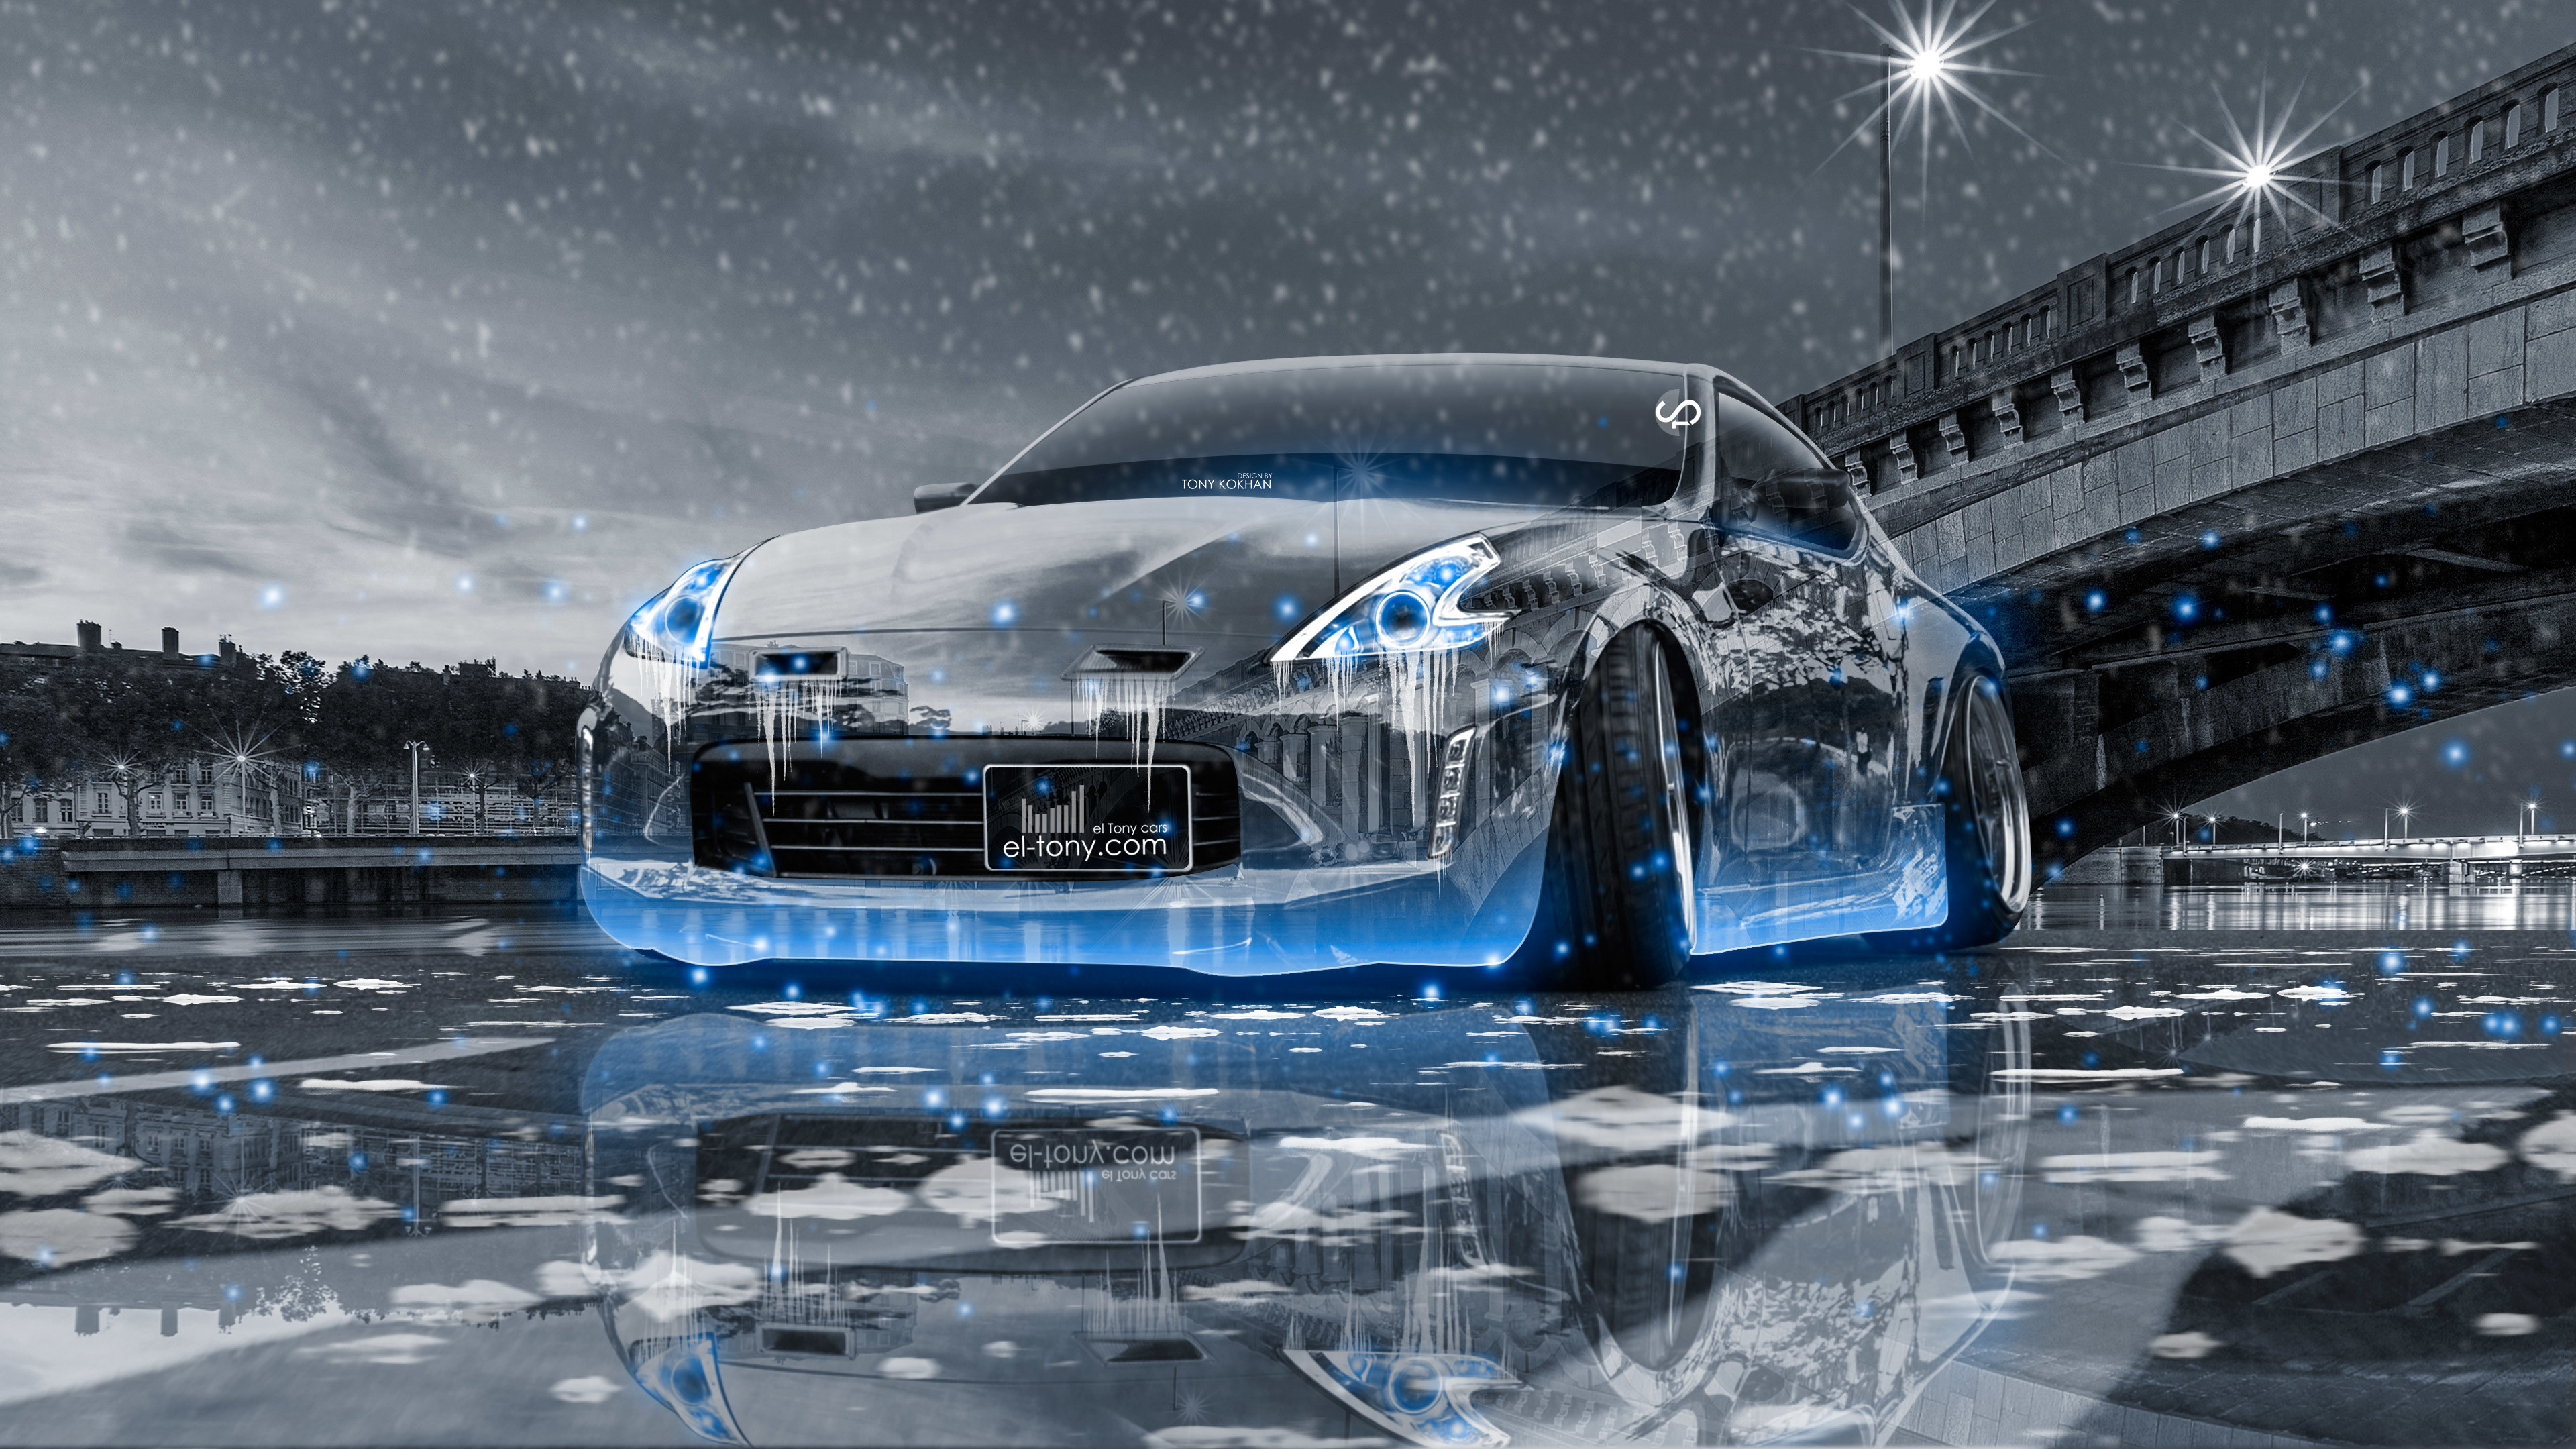 3840x2160 Nissan-370Z-Tuning-3D-Crystal-City-Ice-Snow-